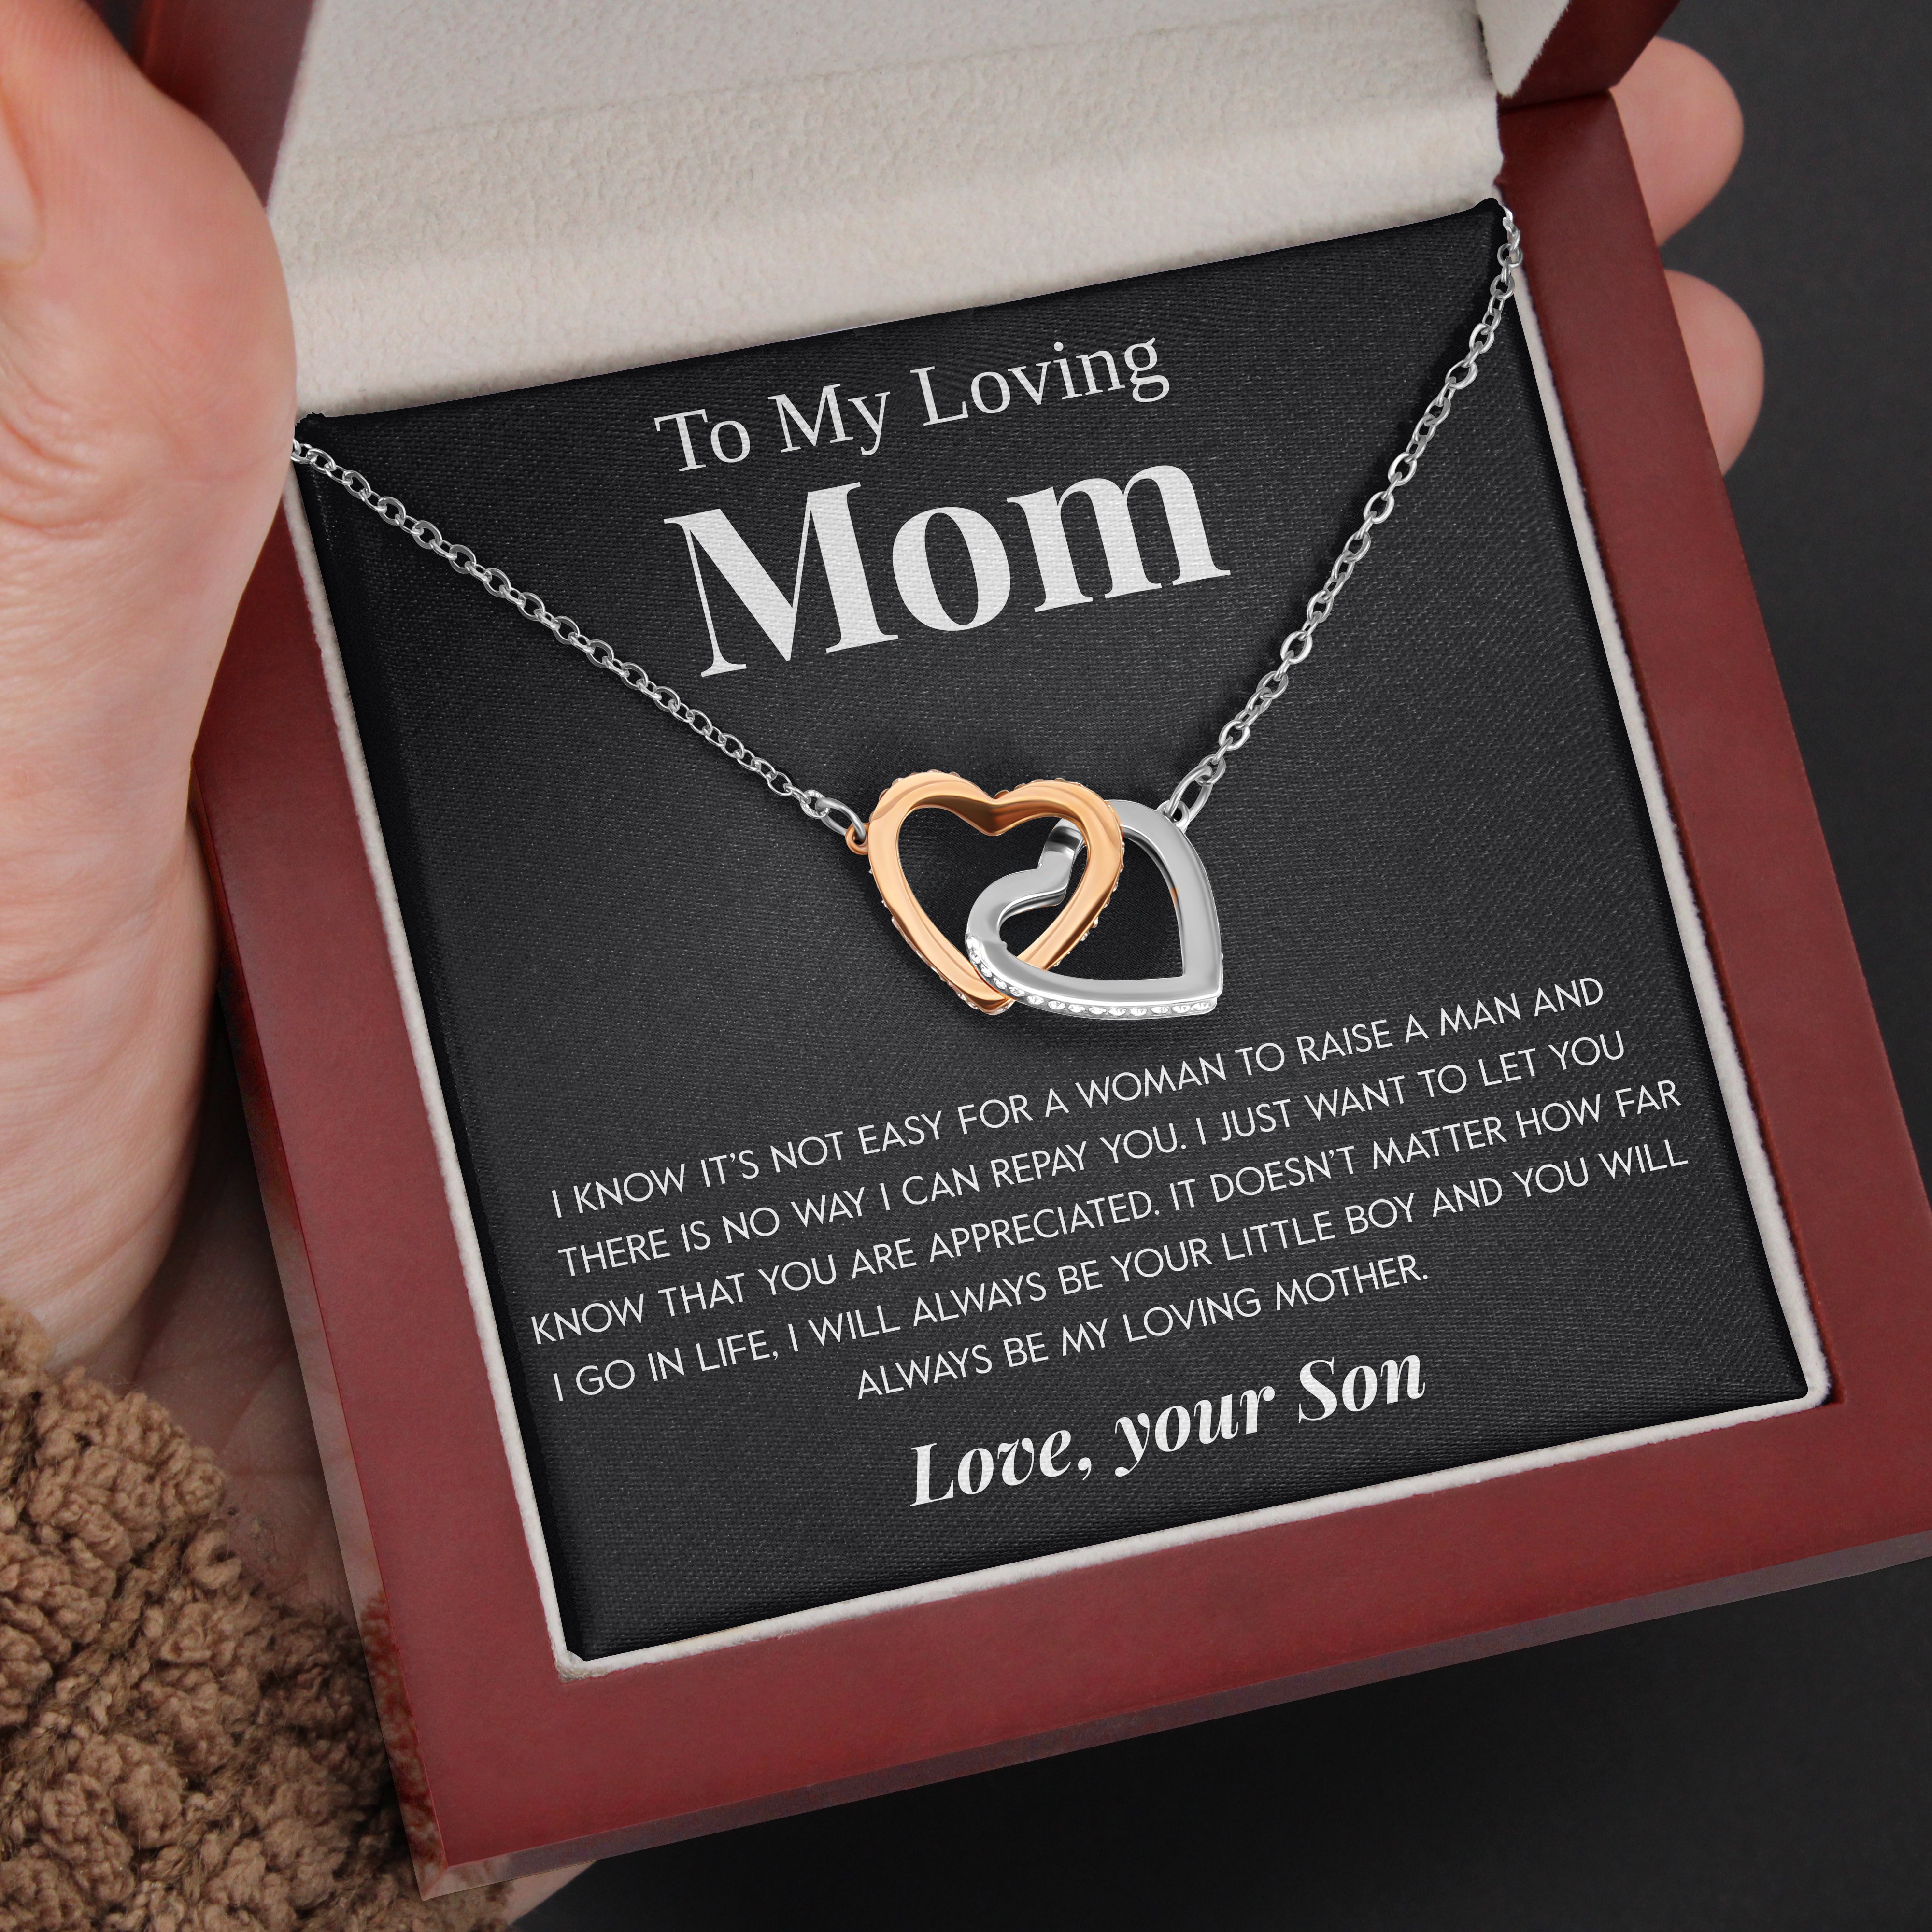 To My Loving Mom | "My Loving Mother" | Interlocking Hearts Necklace